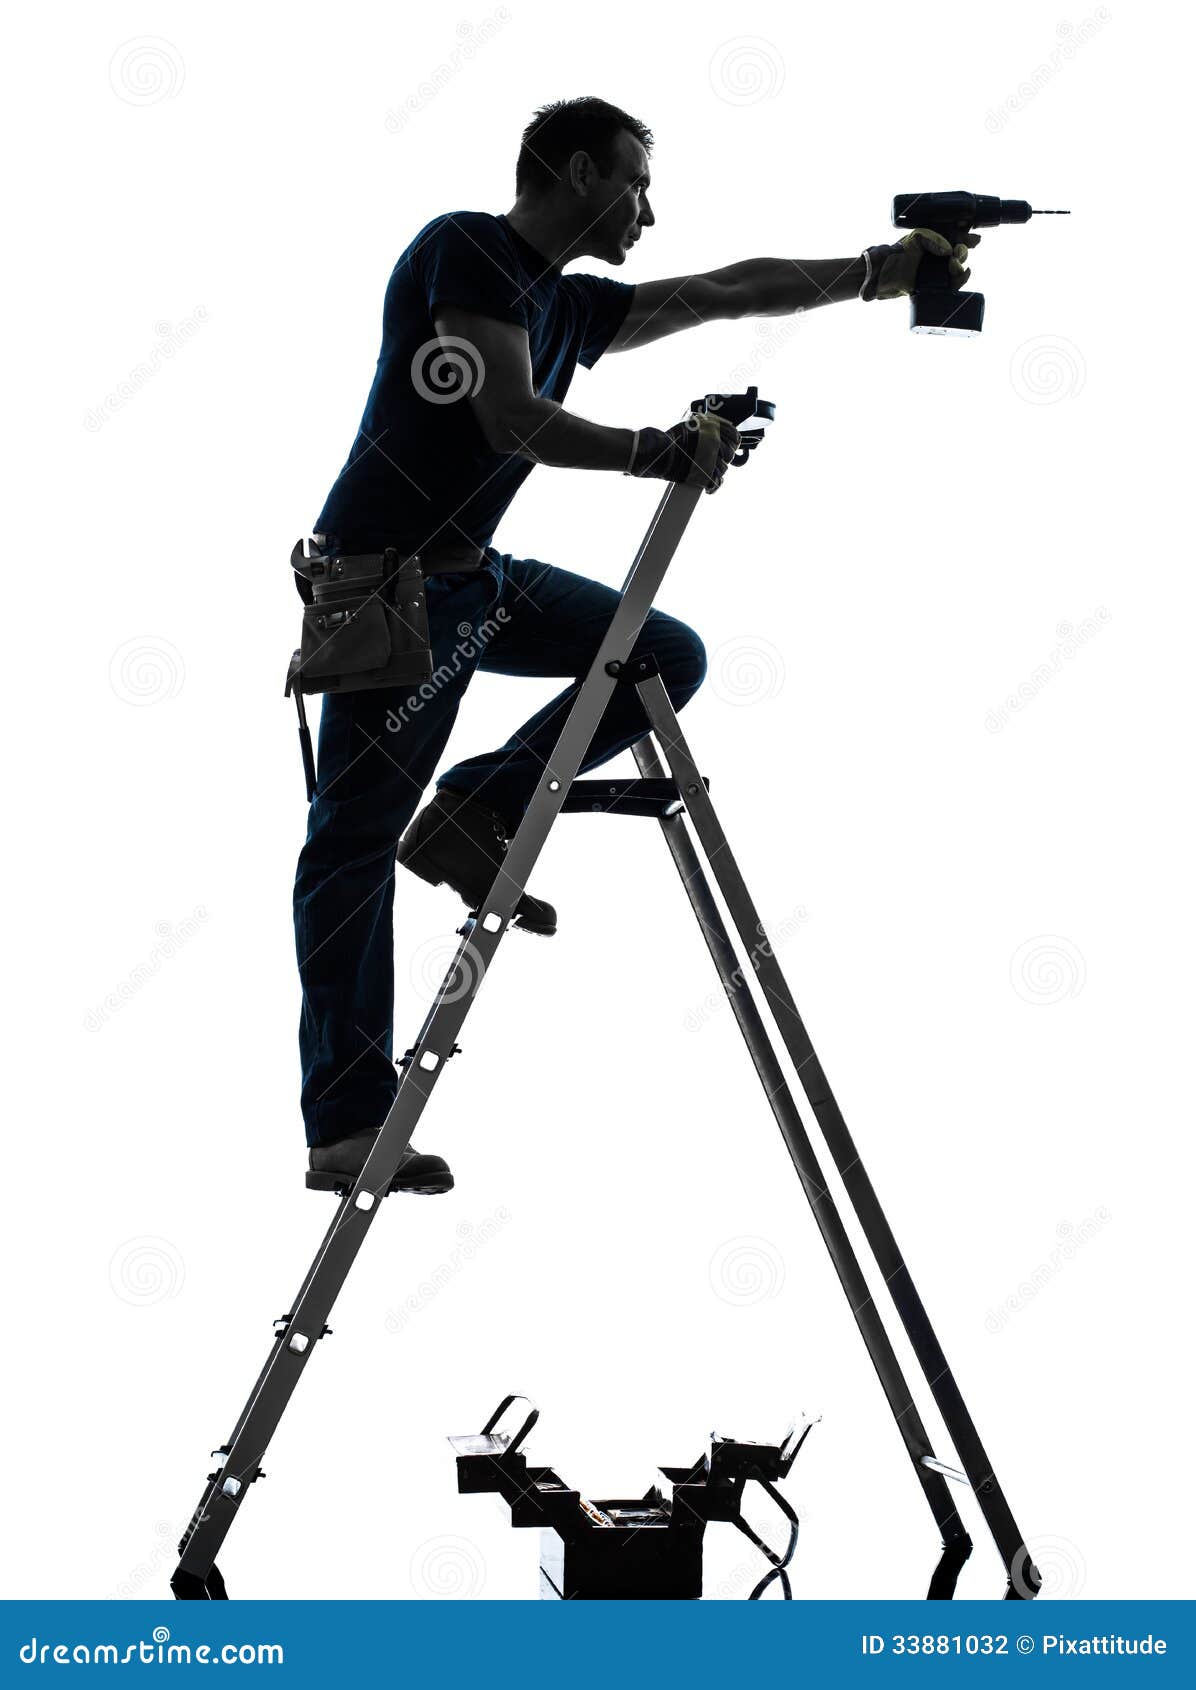 clipart man on ladder - photo #36